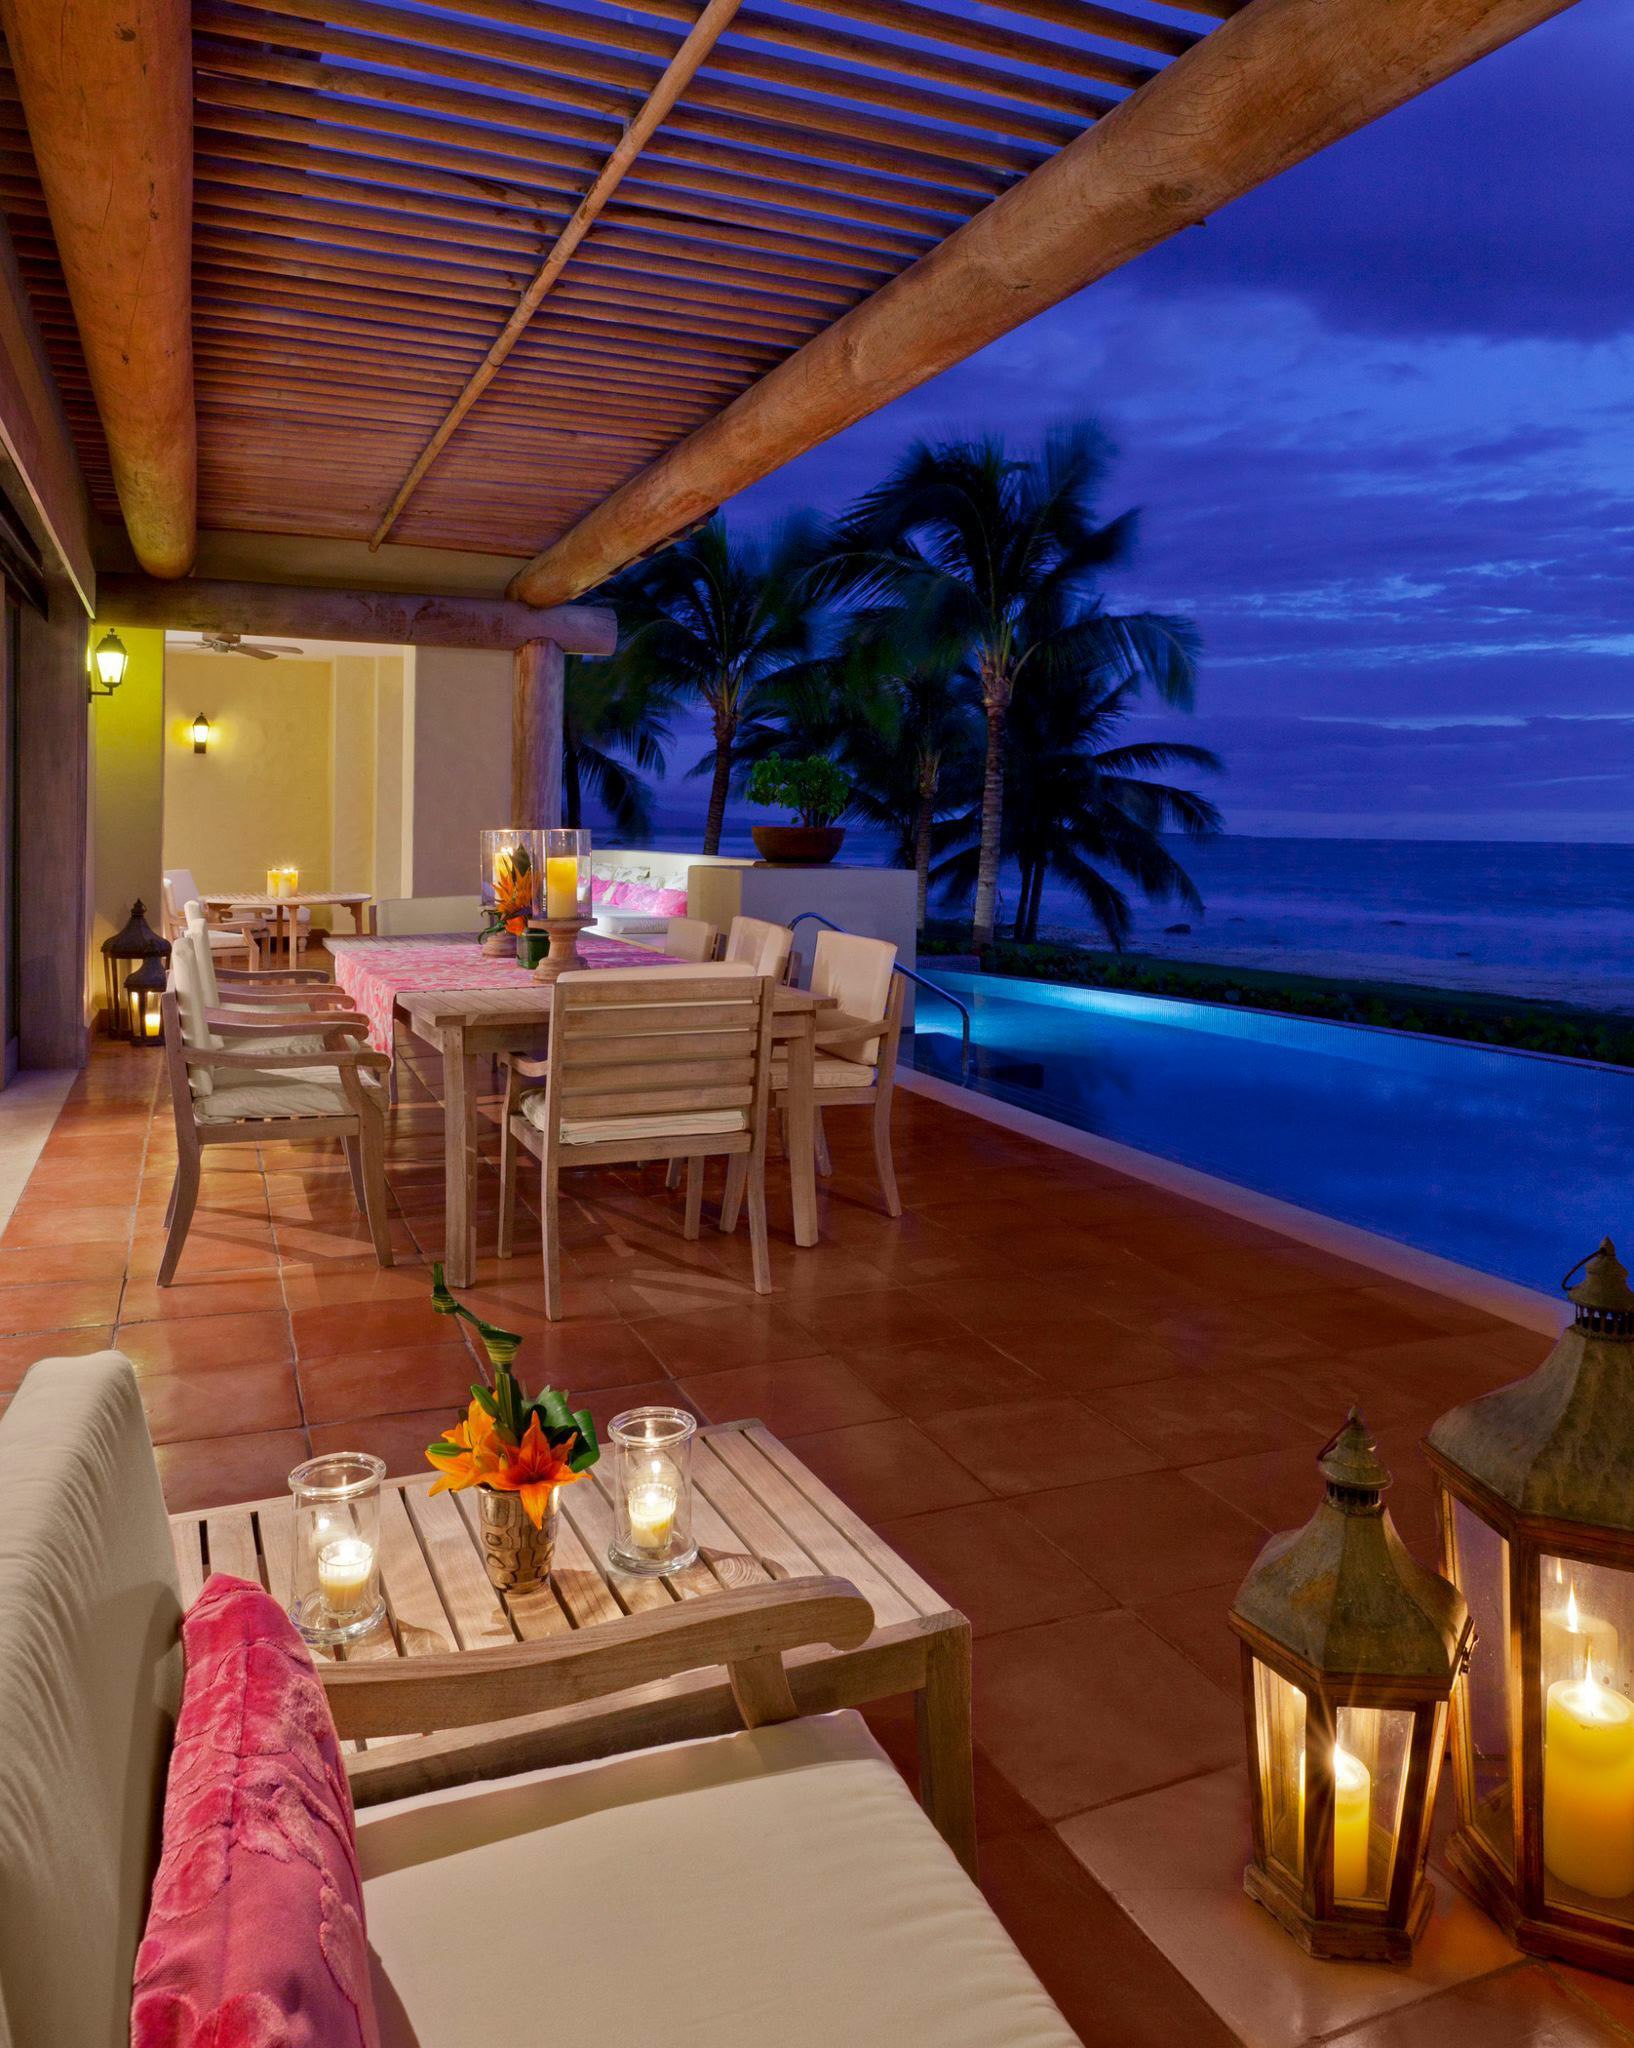 The St. Regis Punta Mita Resort – Nayarit, Mexico – Villa Infinity Pool Deck Sunset